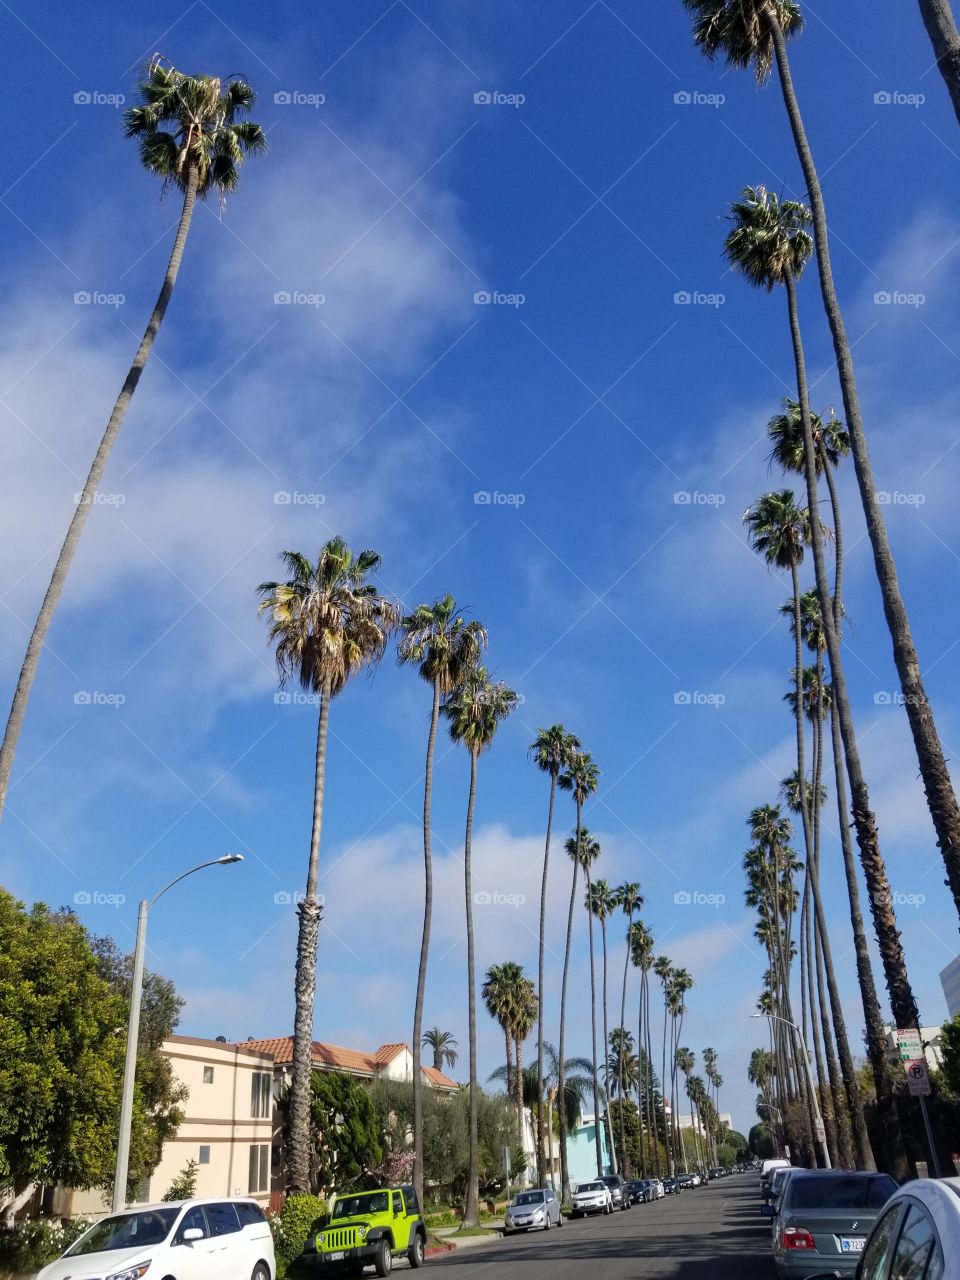 Lots of long and tall palm trees in beautiful sunny Coastal California street.